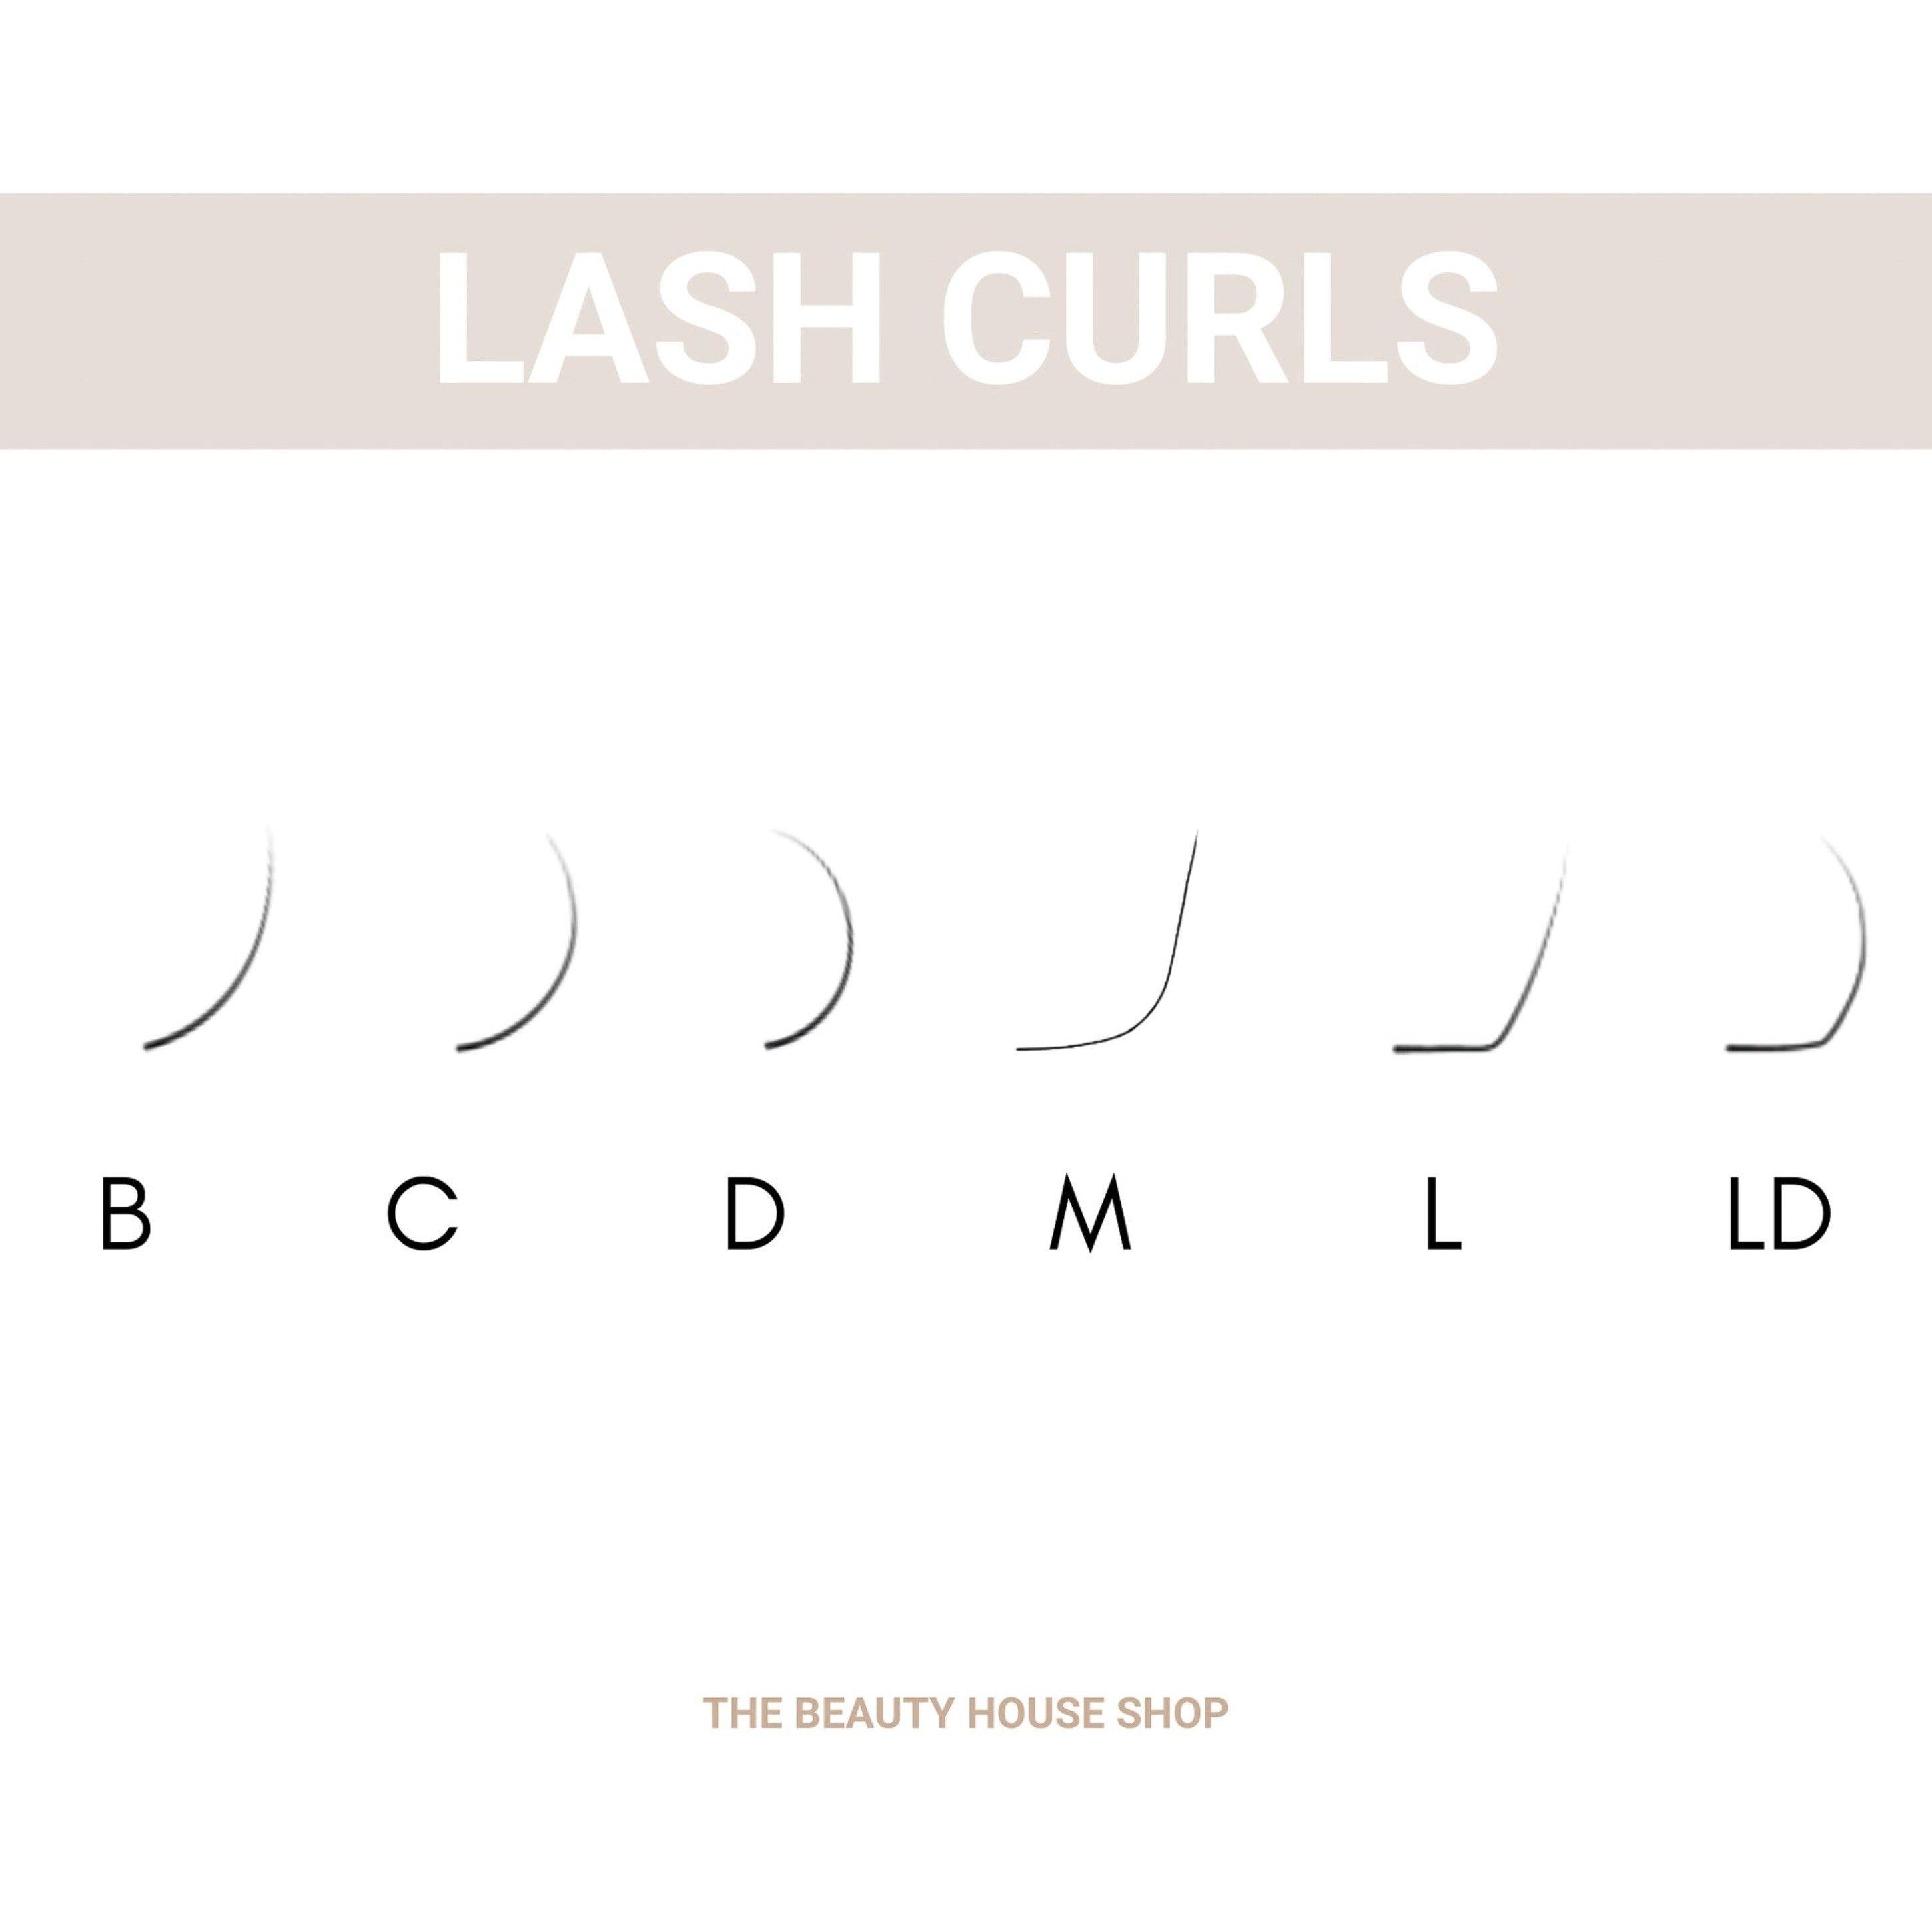 Different lash curls for eyelash extensions